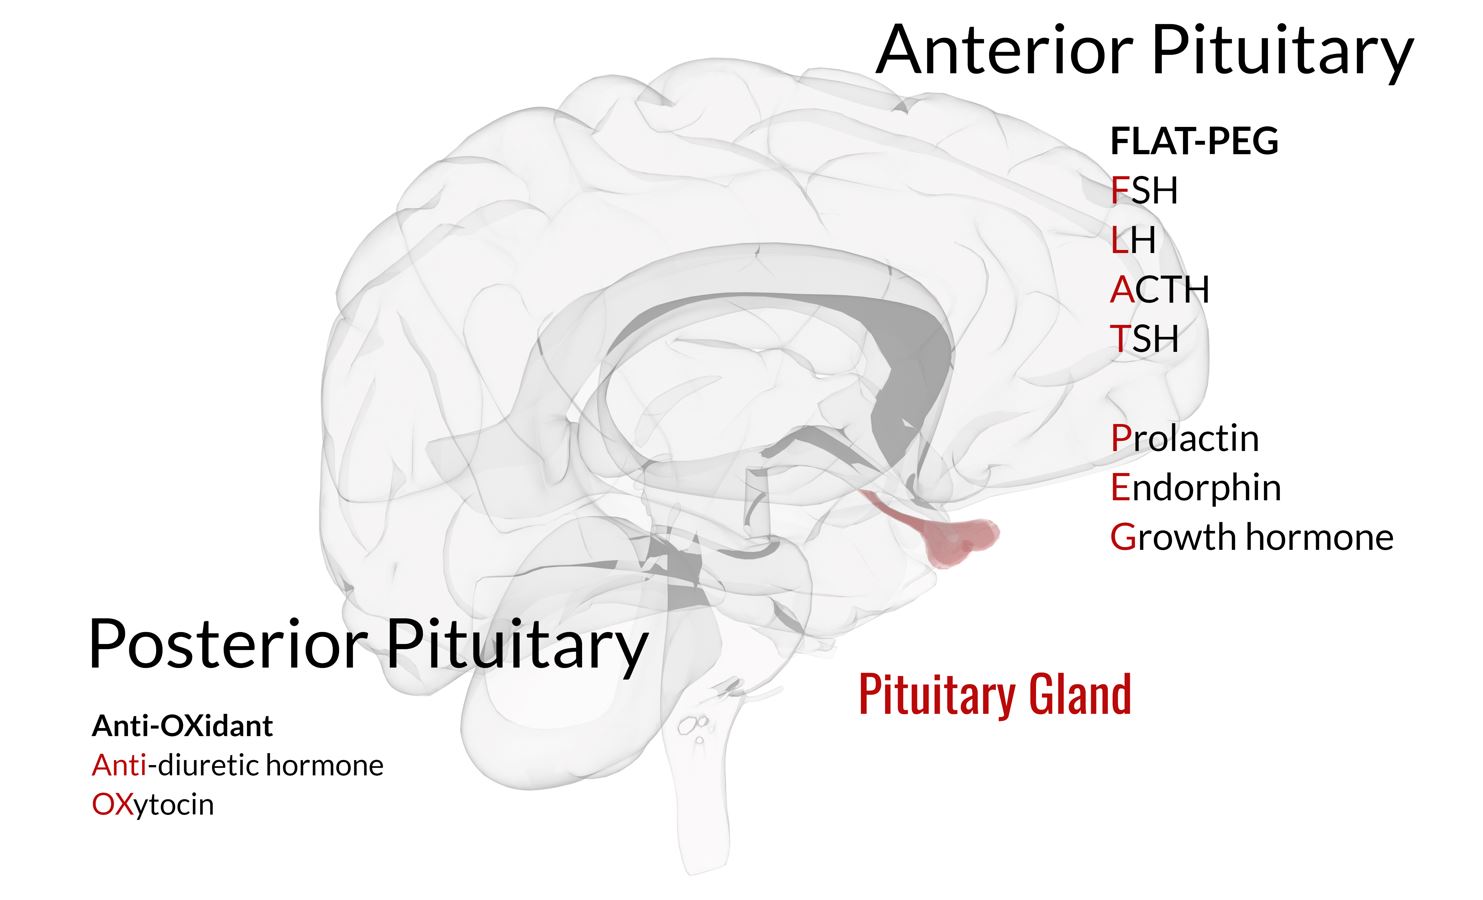 Anterior and Posterior Pituitary hormones mnemonic